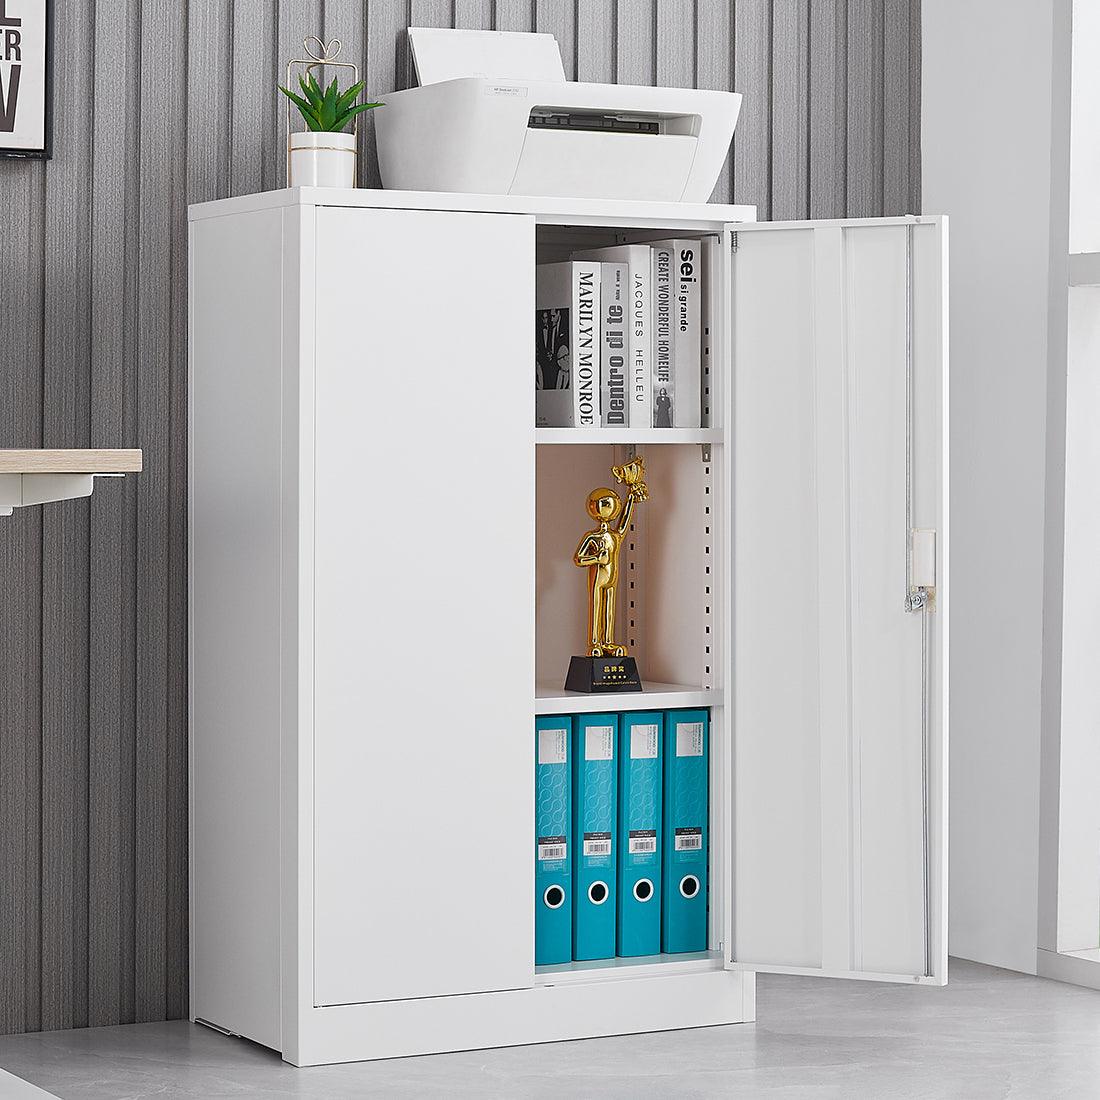 🆓🚛 Low Metal Storage Cabinet With Locking Doors & Adjustable Shelves - White